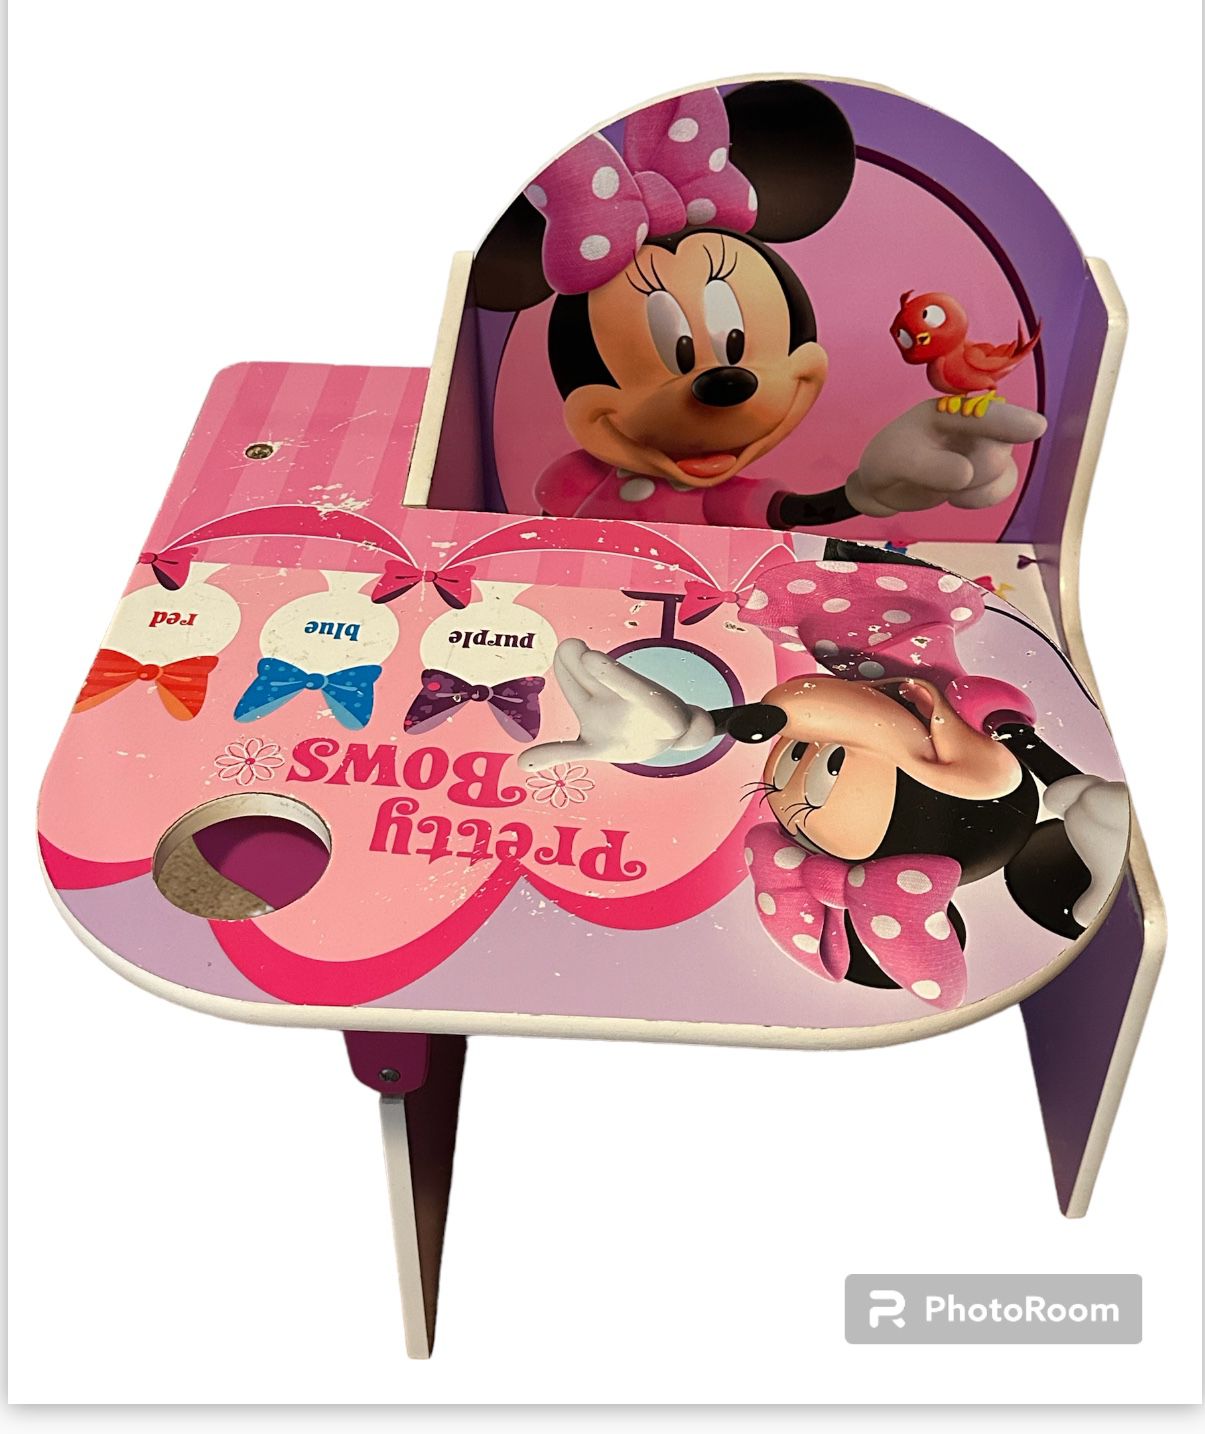 Chair Desk, Disney Minnie Mouse